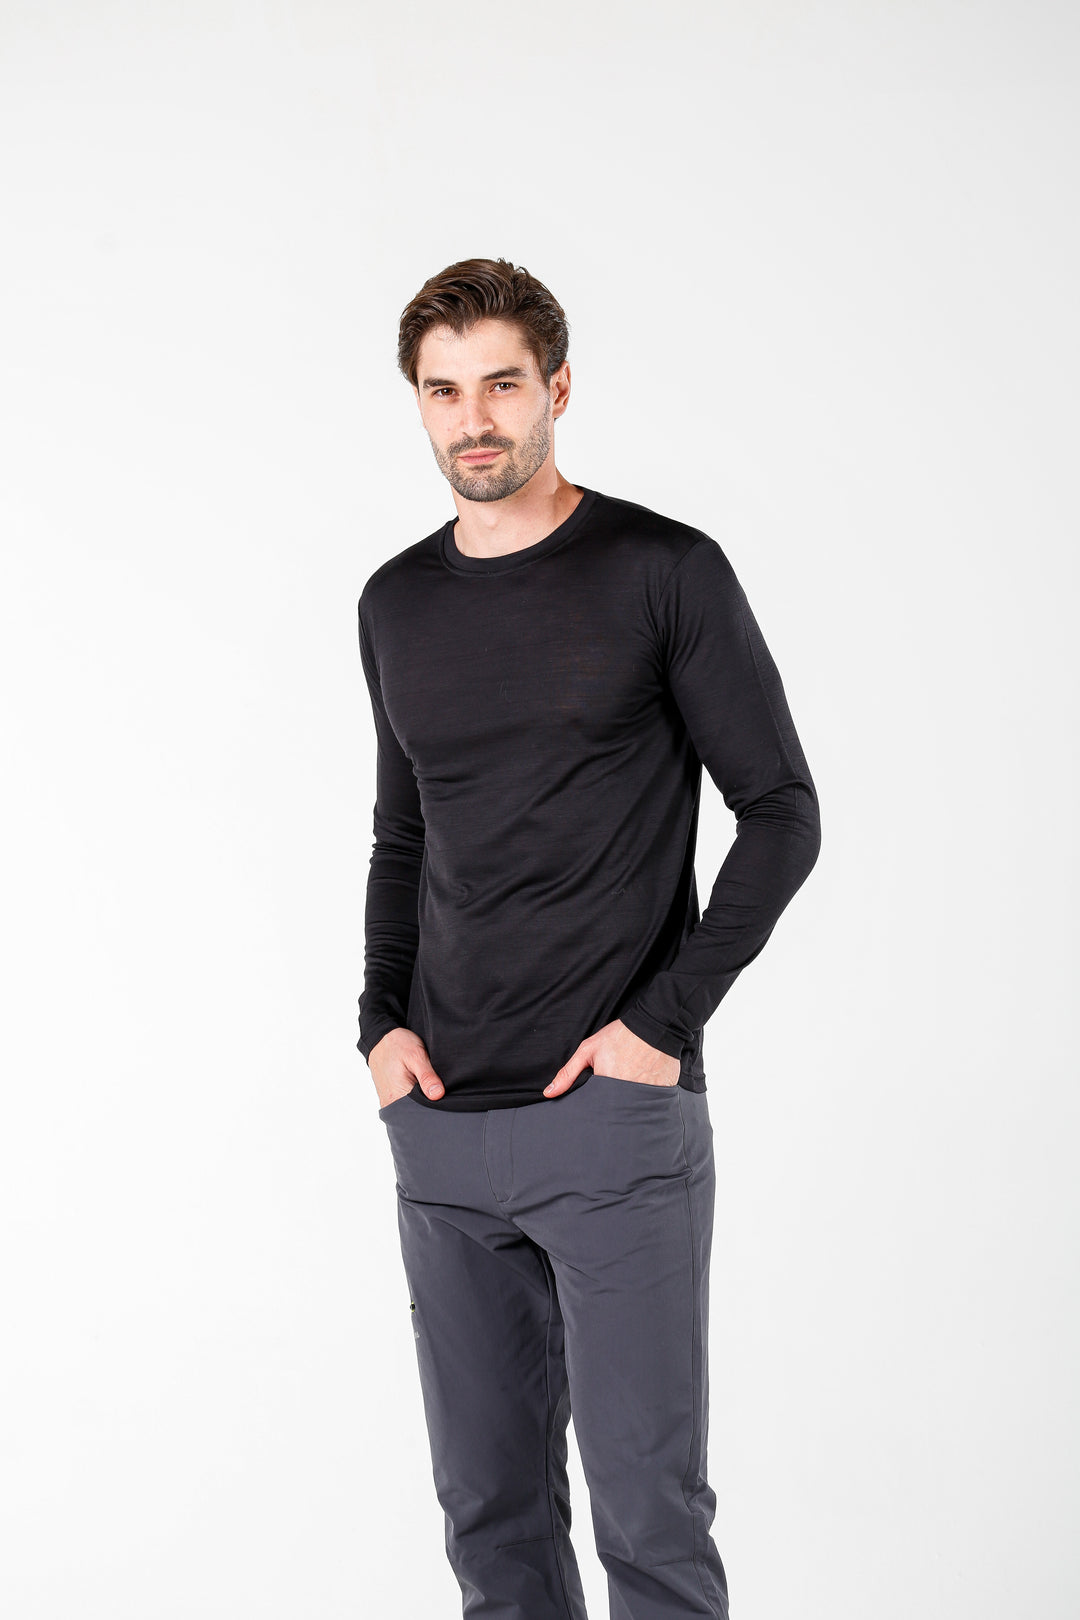 ERIS- Aktivni veš  Cool wool 100% merino vuna majica dugi rukav